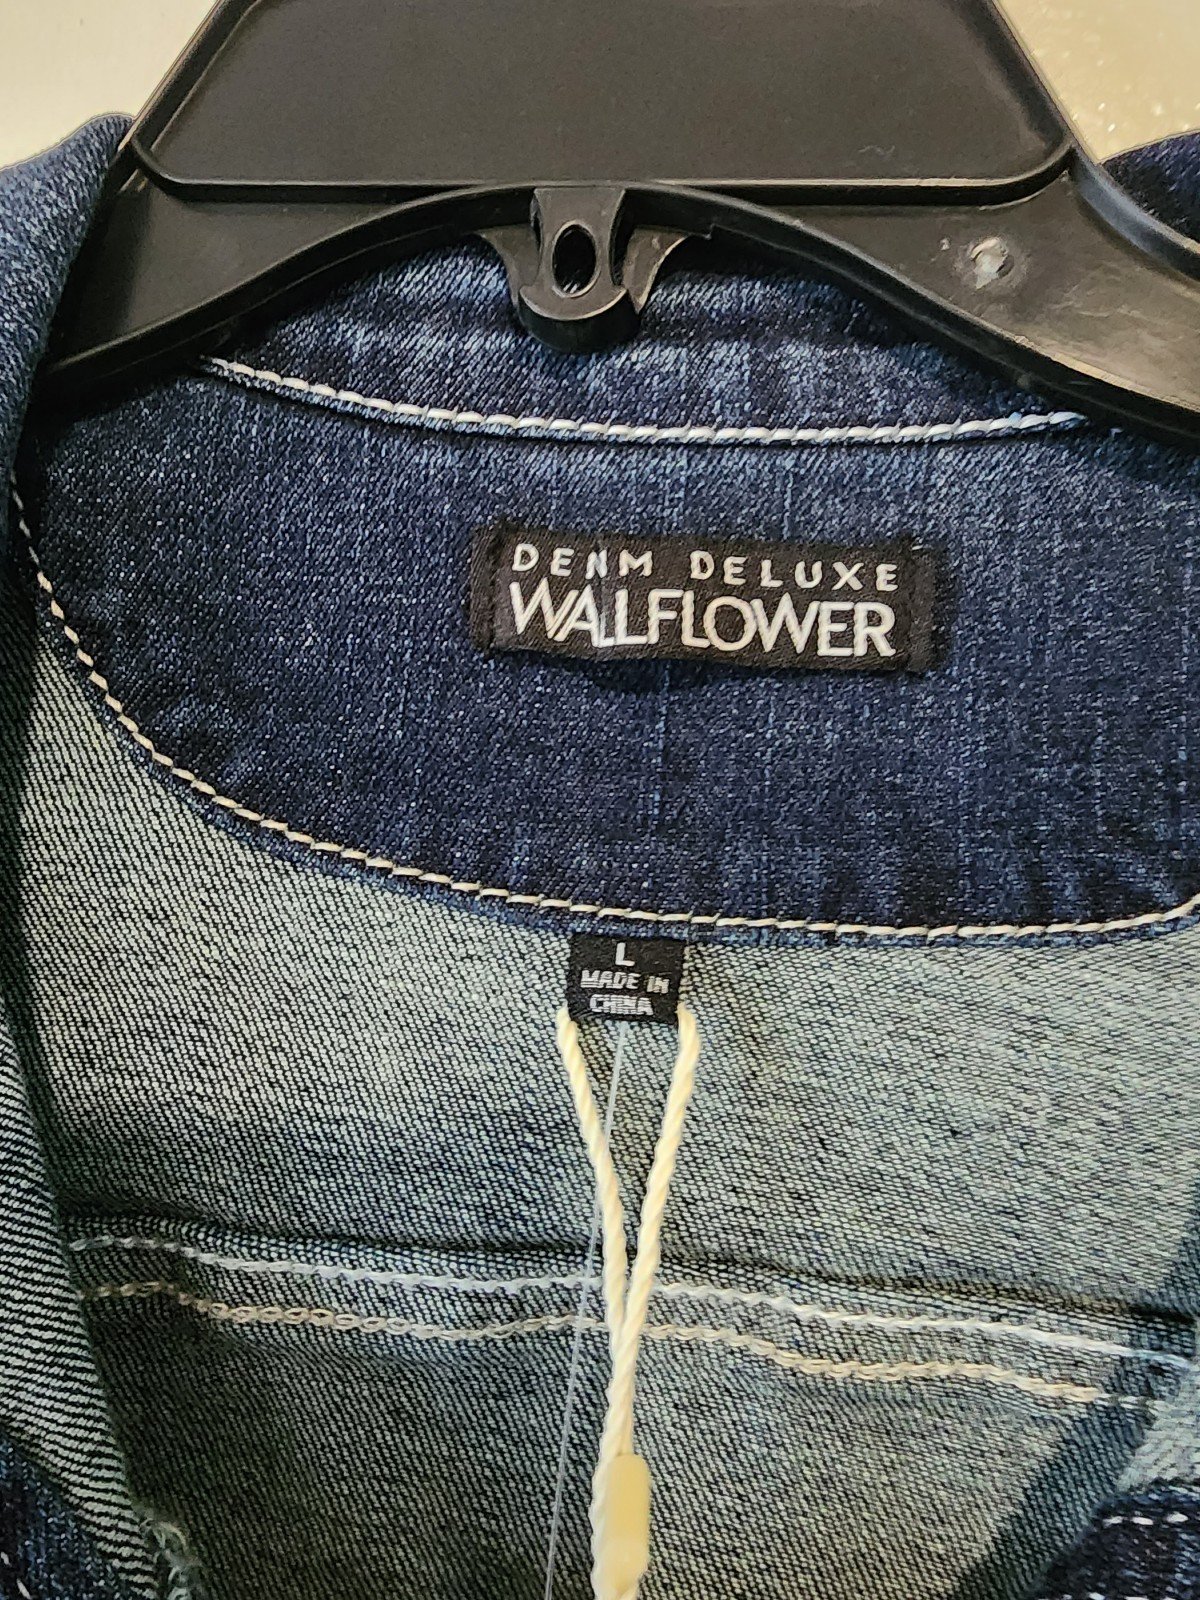 the Lowest price Womens wallflower denim jacket pMhyxp2iB no tax